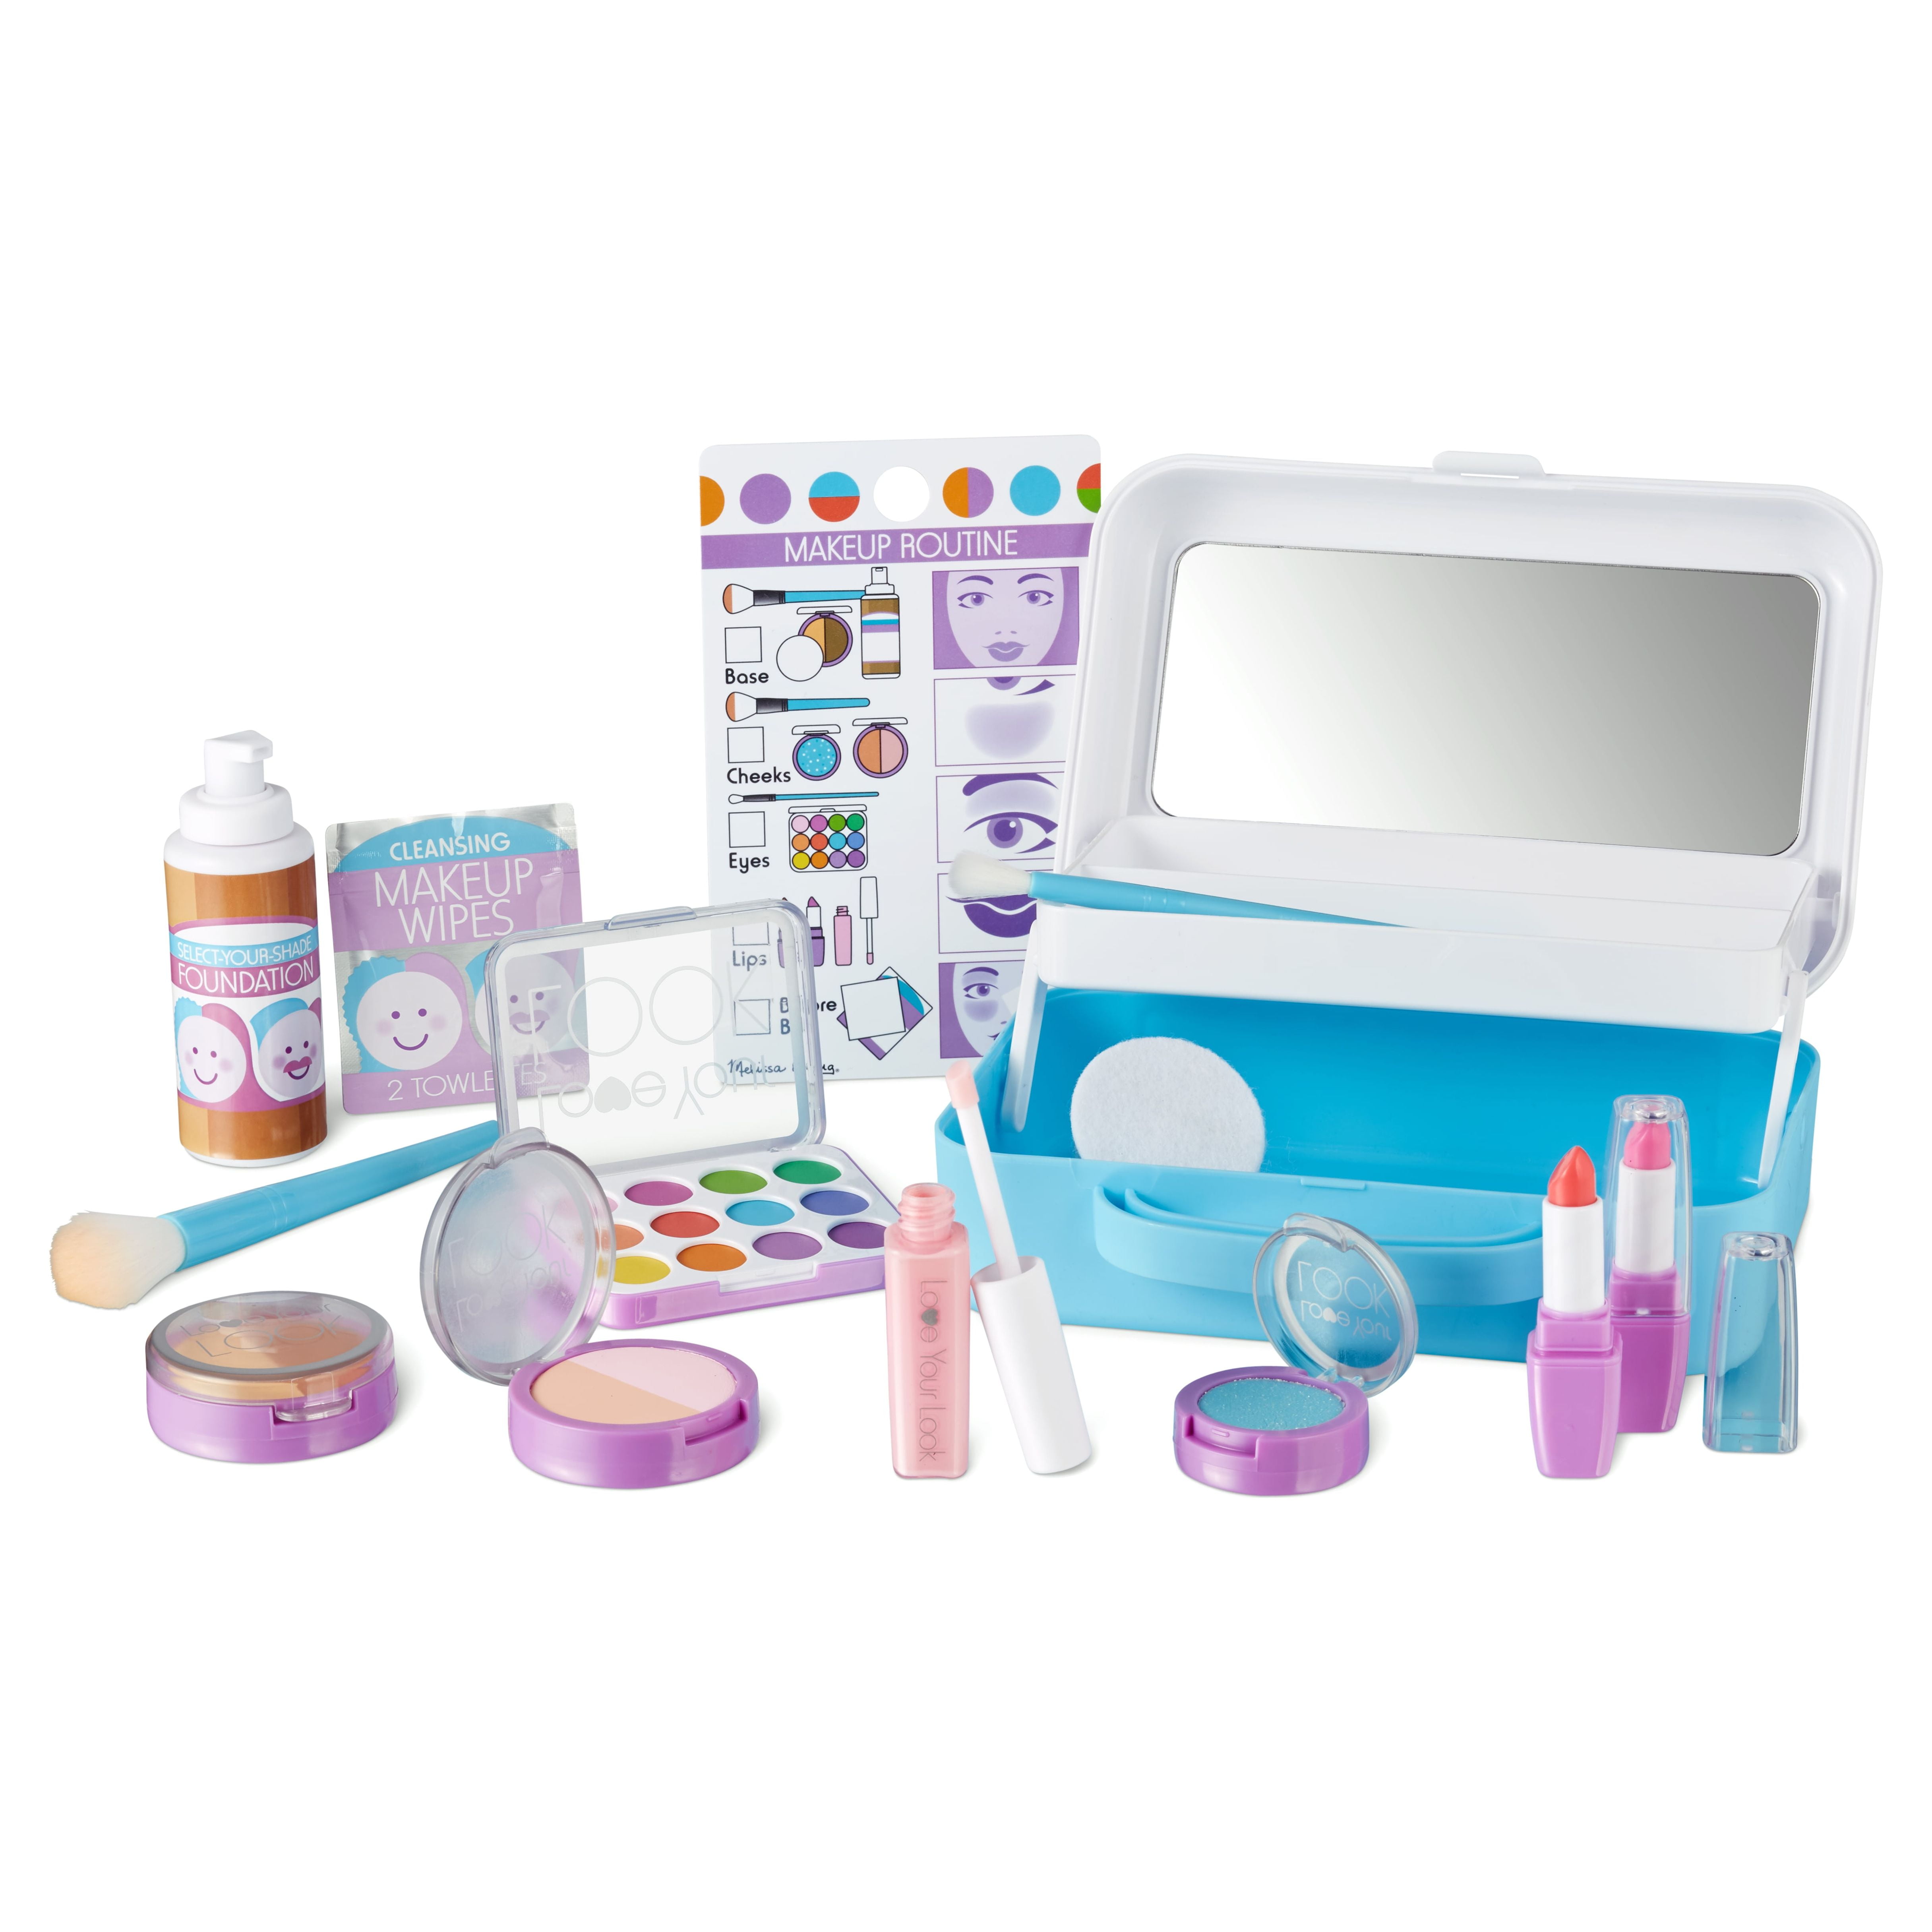  SUPER JOY Kids Real Makeup Kit for Little Girls:with